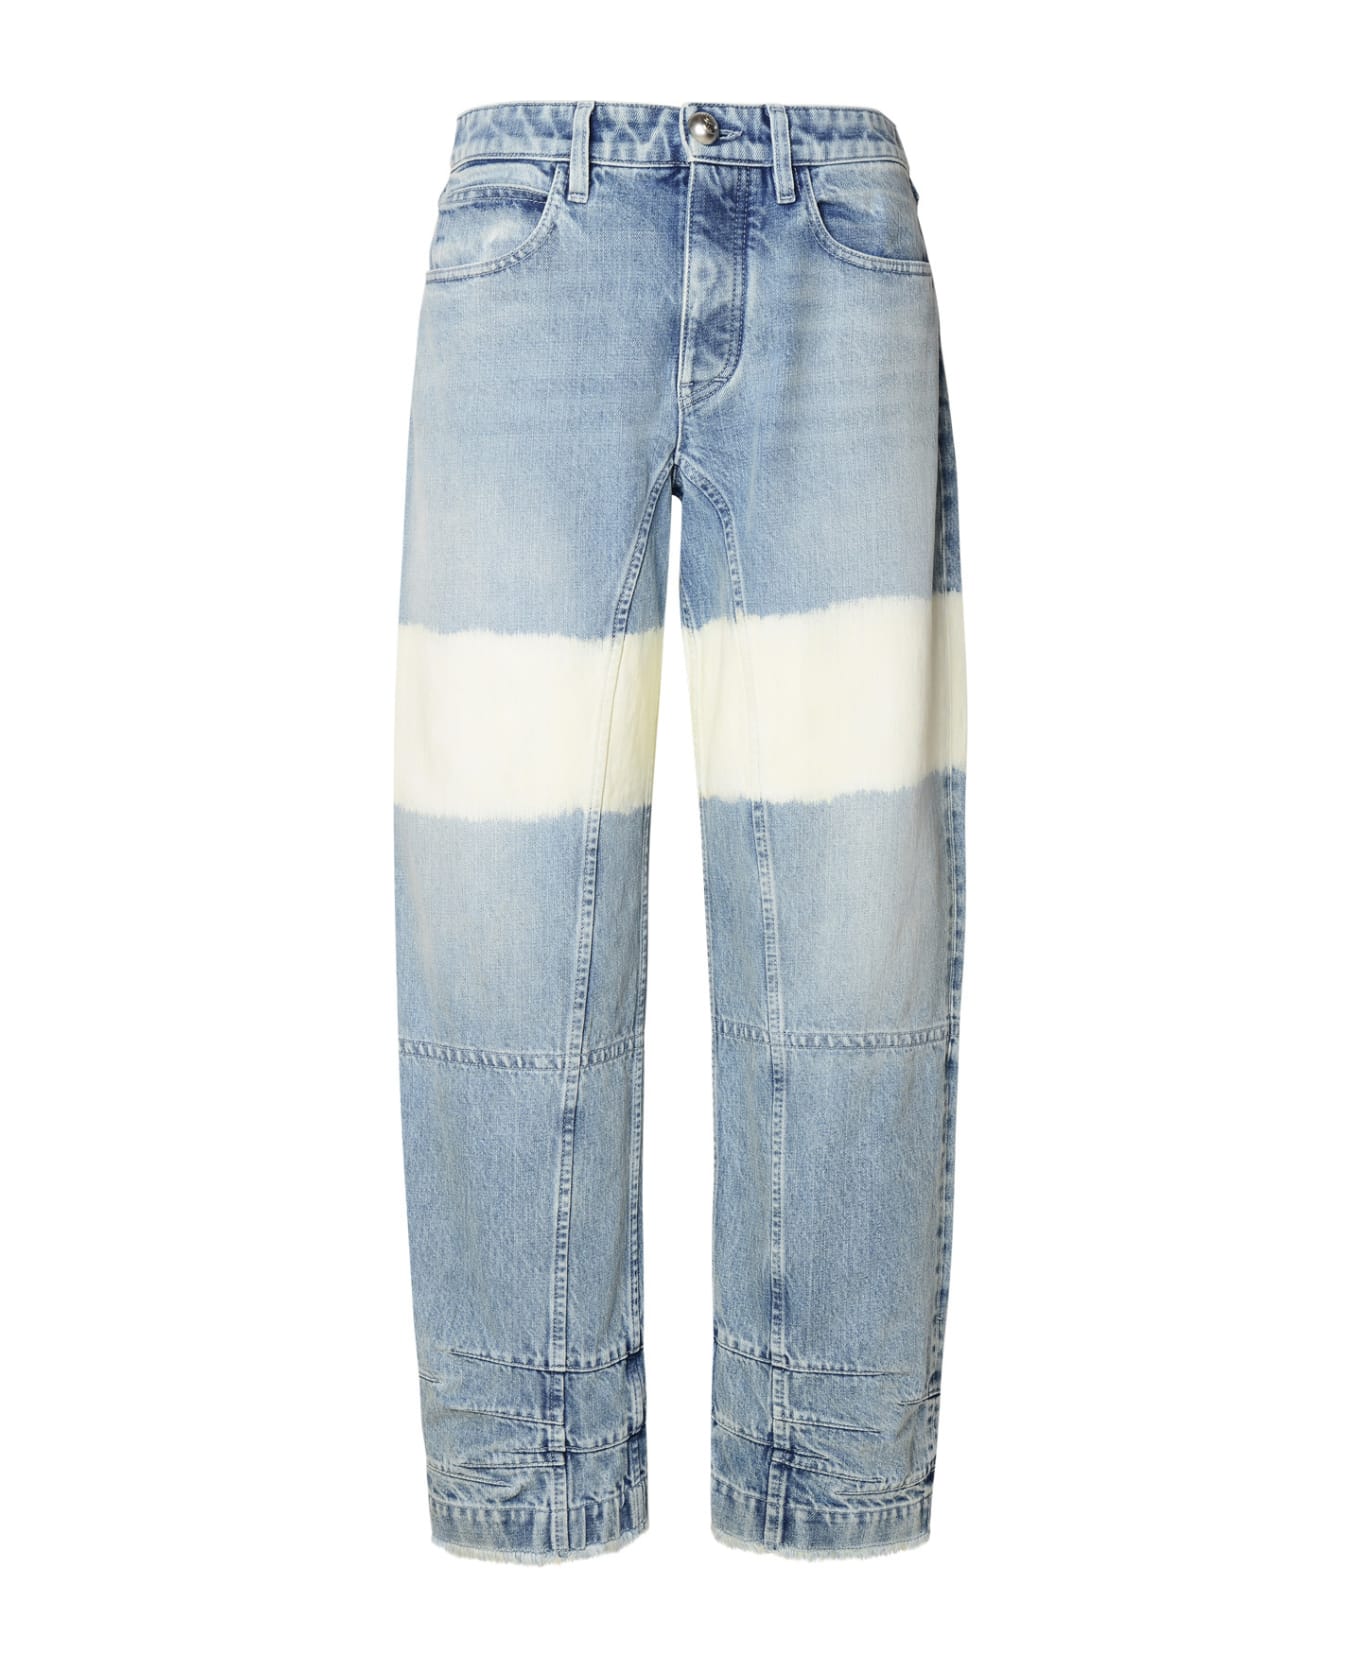 Jil Sander Light Blue Organic Cotton Jeans - Light Blue デニム